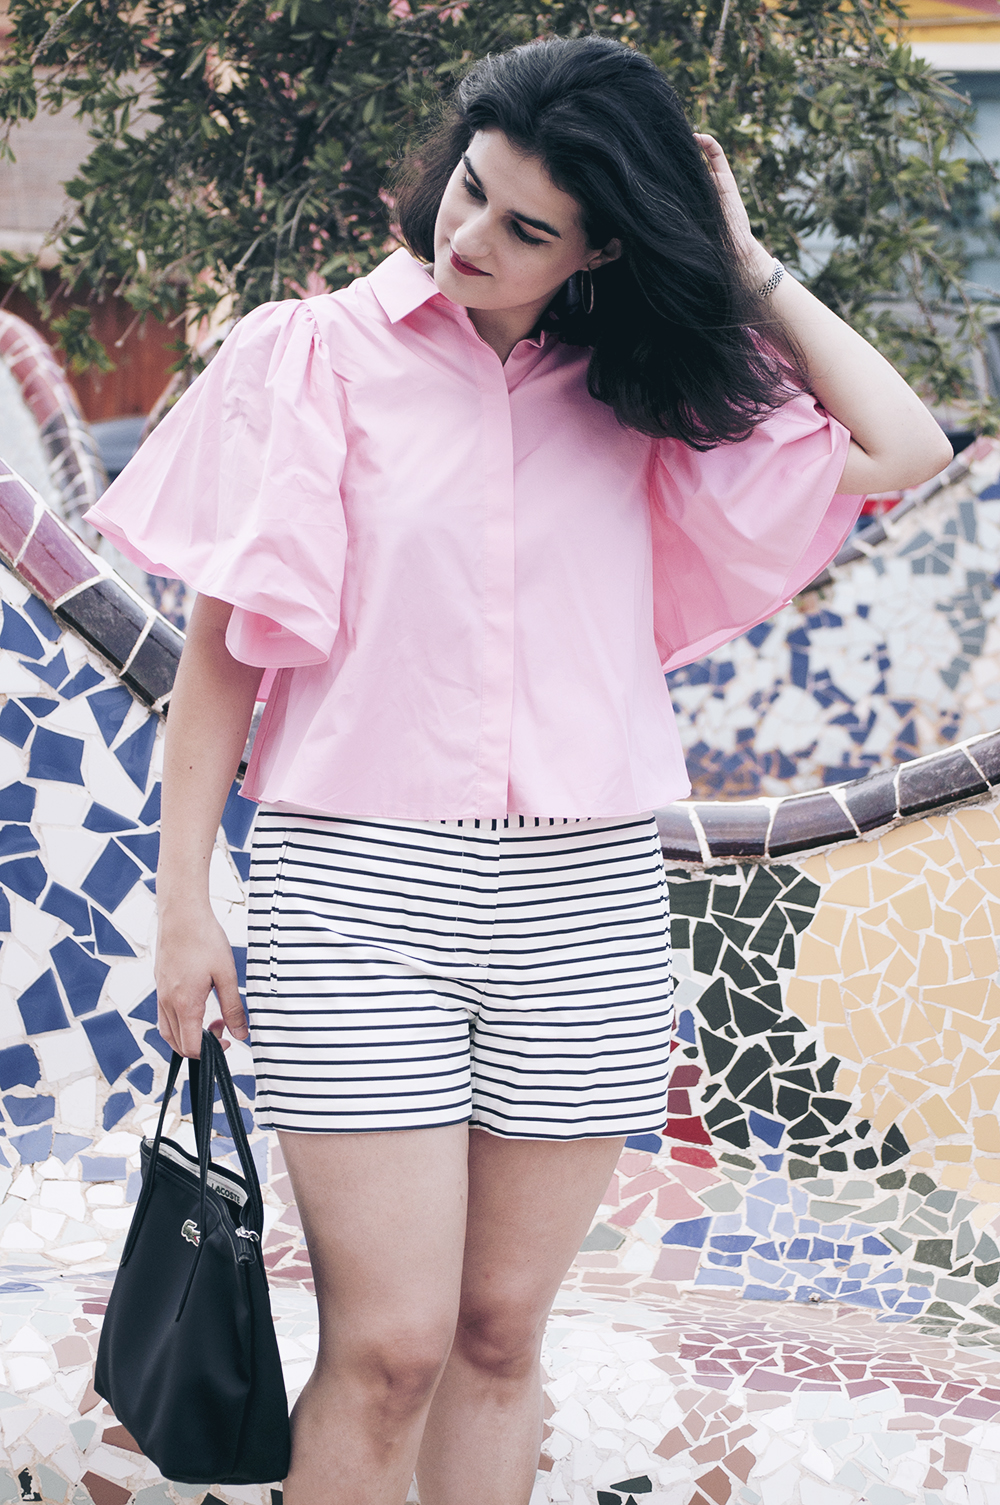 ootd somethingfashion valencia spain bloggers influencers zara pinkshirt dresses summer lookdujour_0066 copia